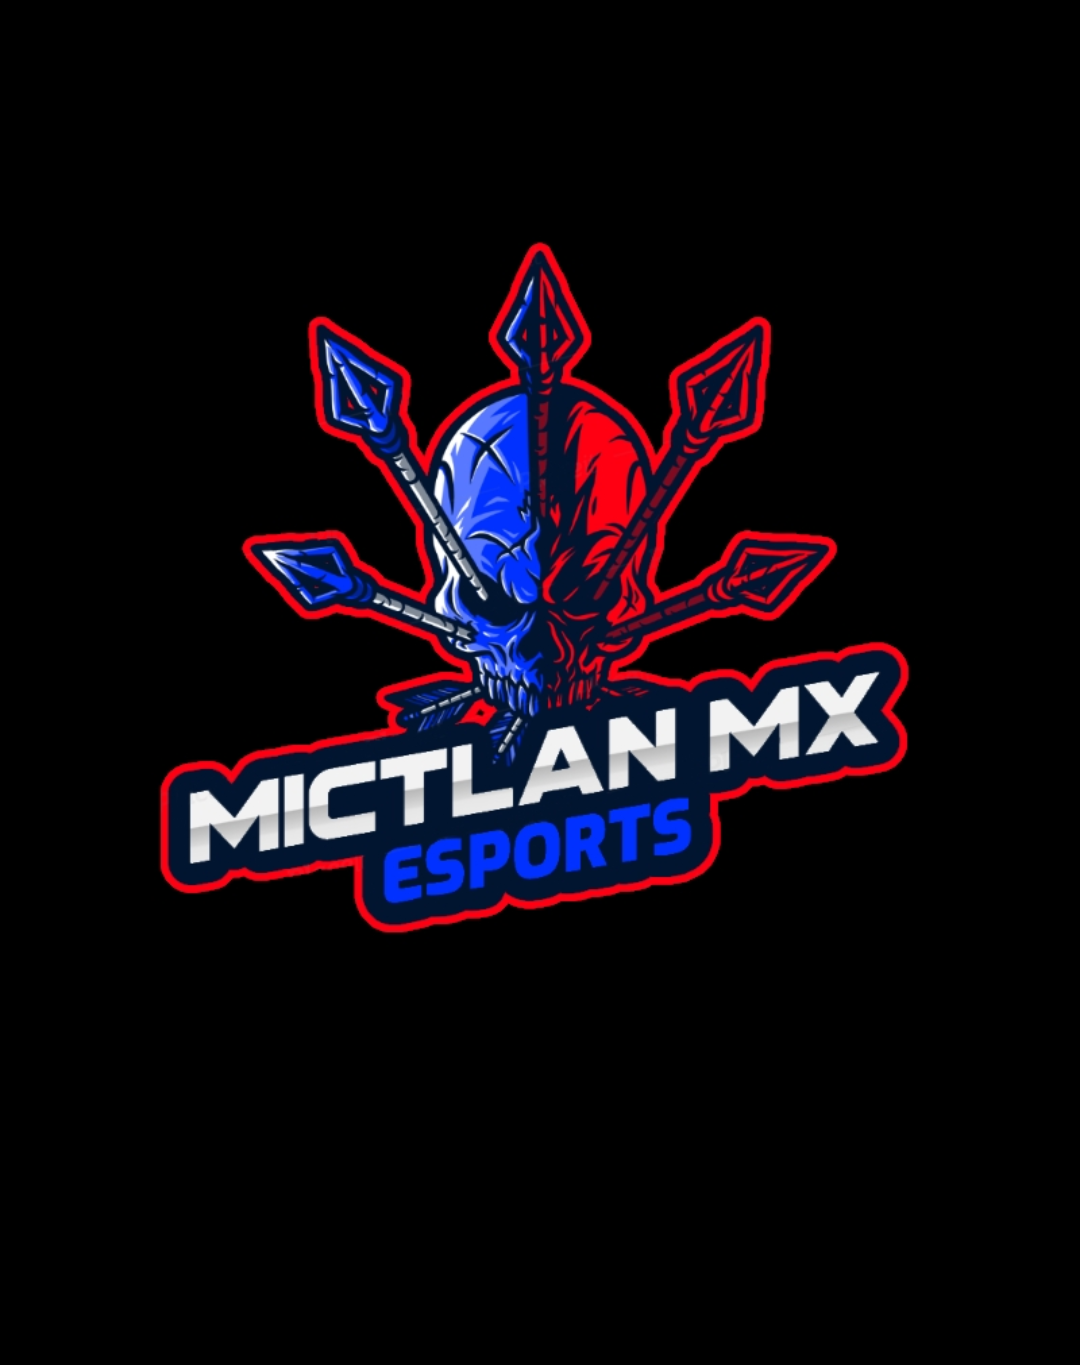 LogotipoMictlan MX eSports